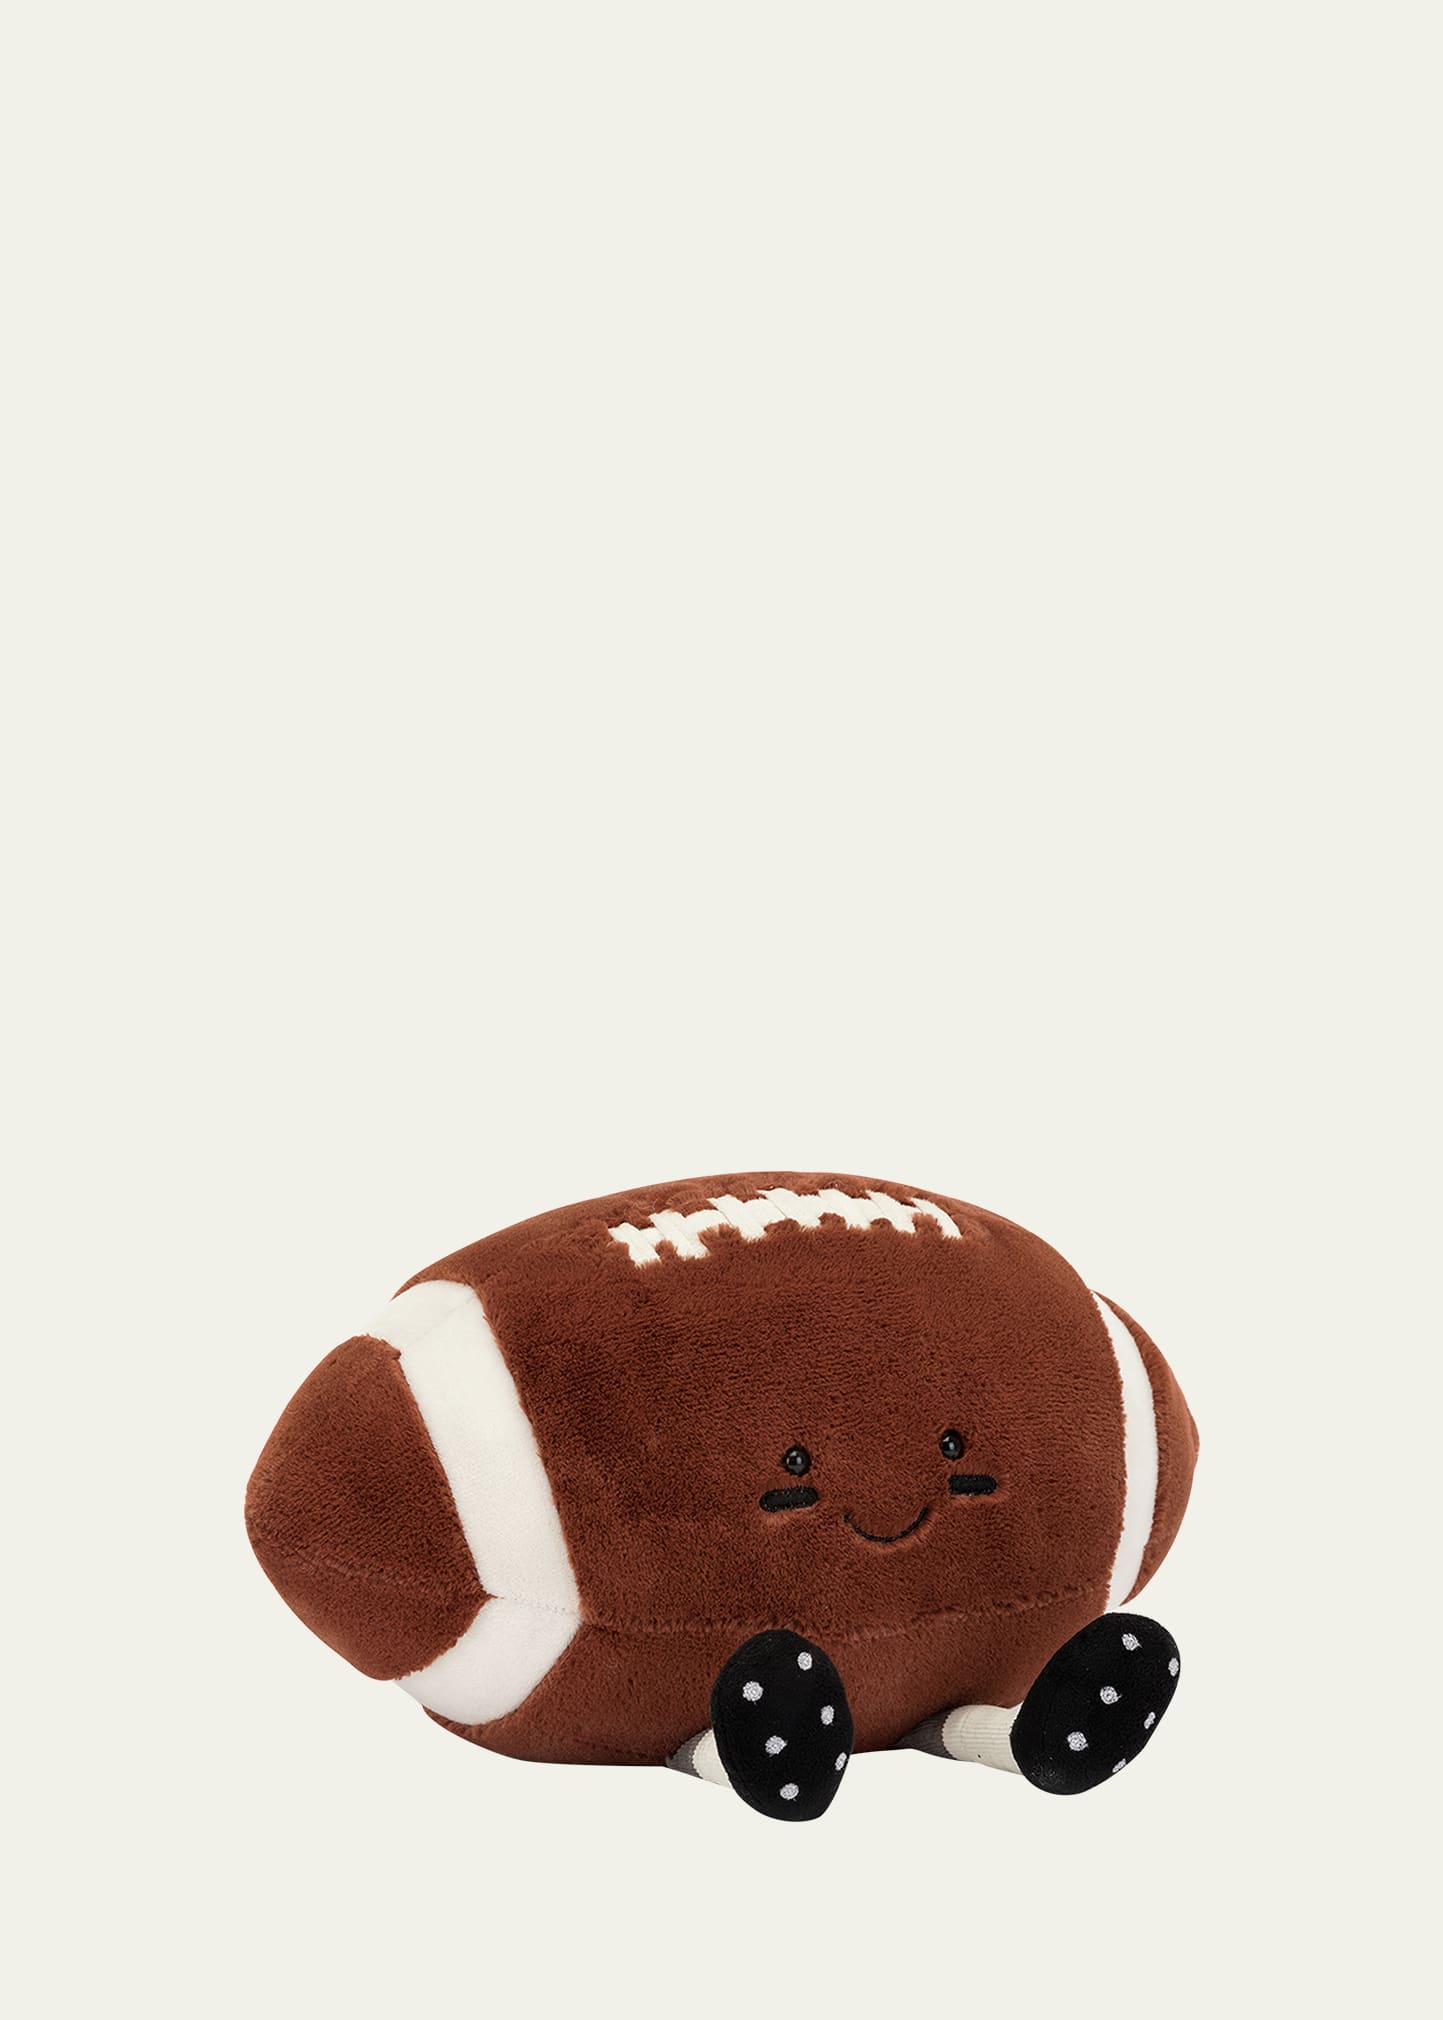 Soft Toy, American football